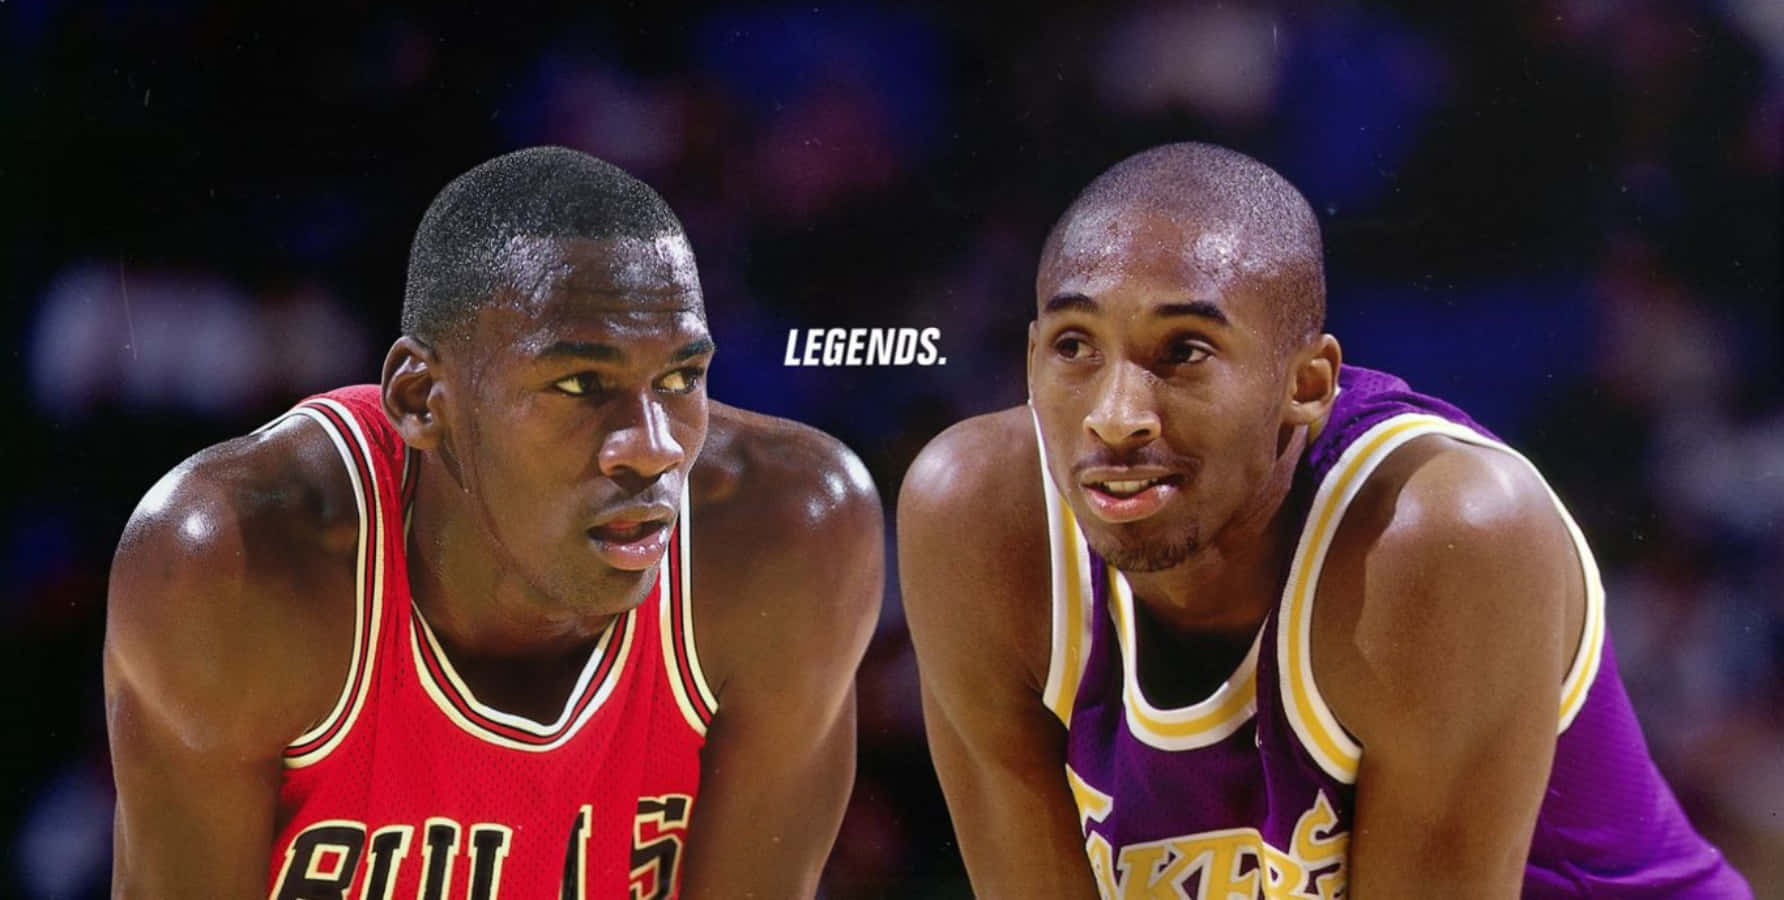 Image  Kobe Bryant and Michael Jordan, forever legends. Wallpaper